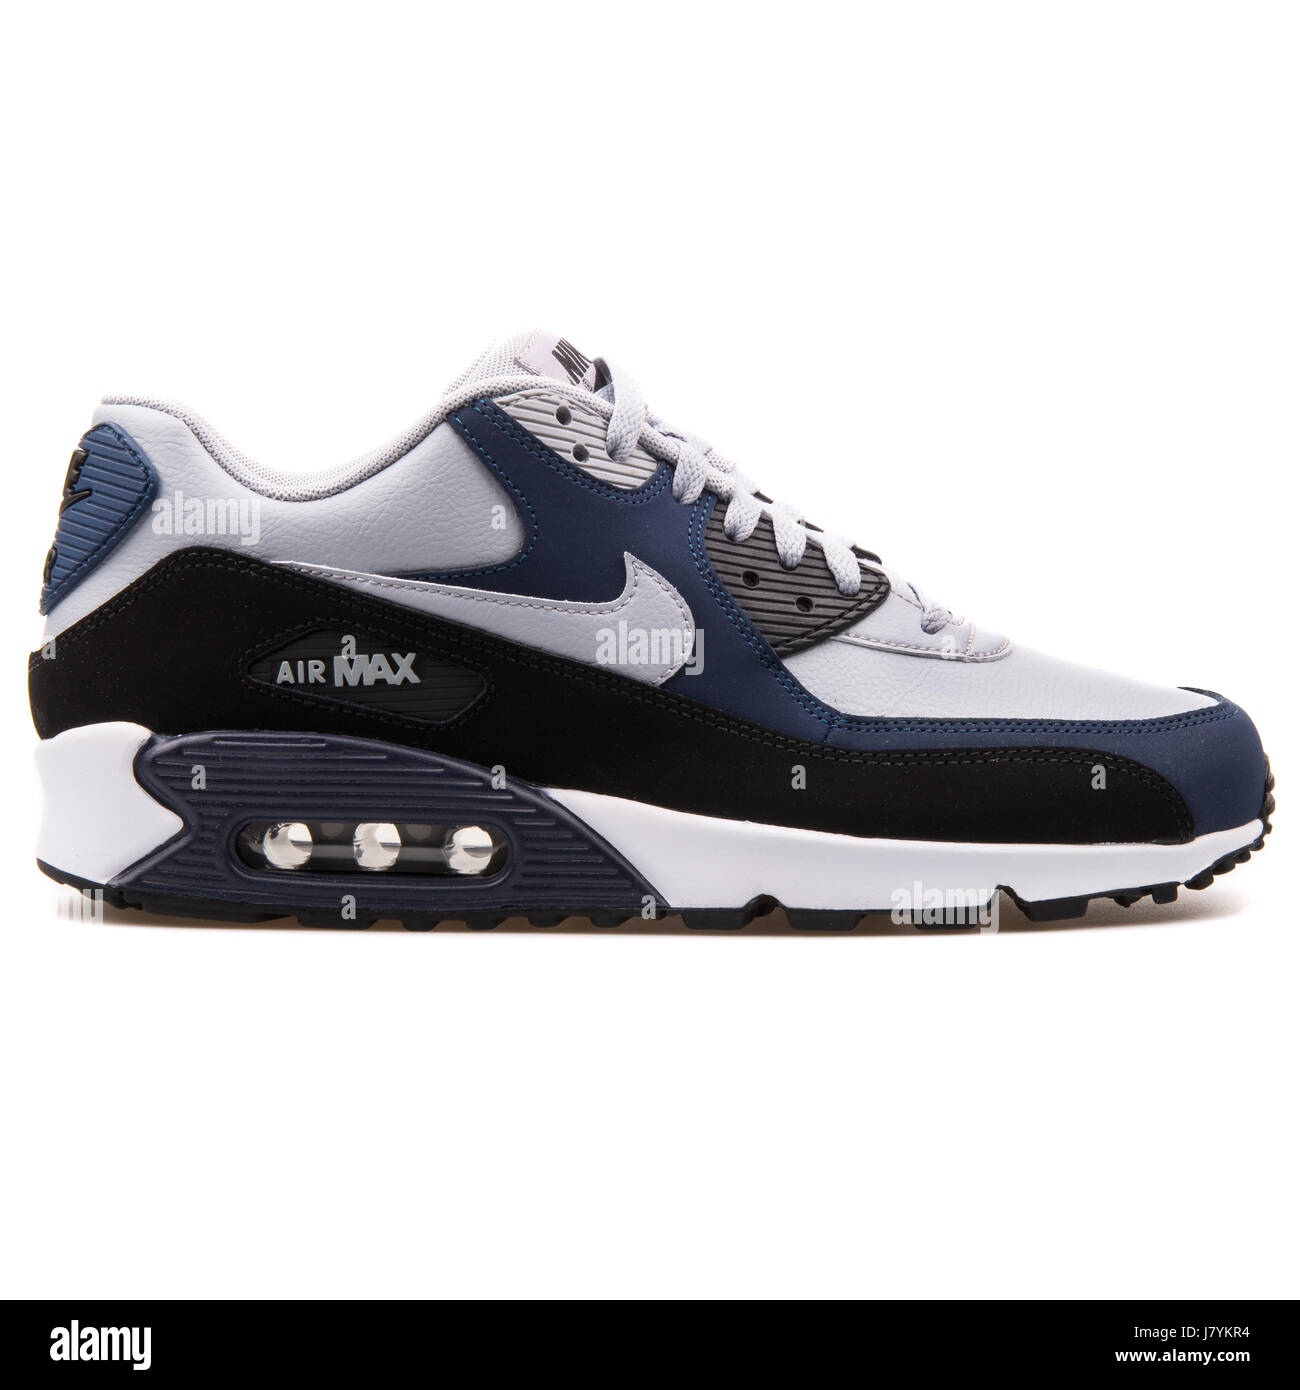 Nike Air Max 90 LTR Gris azul marino hombres zapatillas deportivas -  652980-011 Fotografía de stock - Alamy